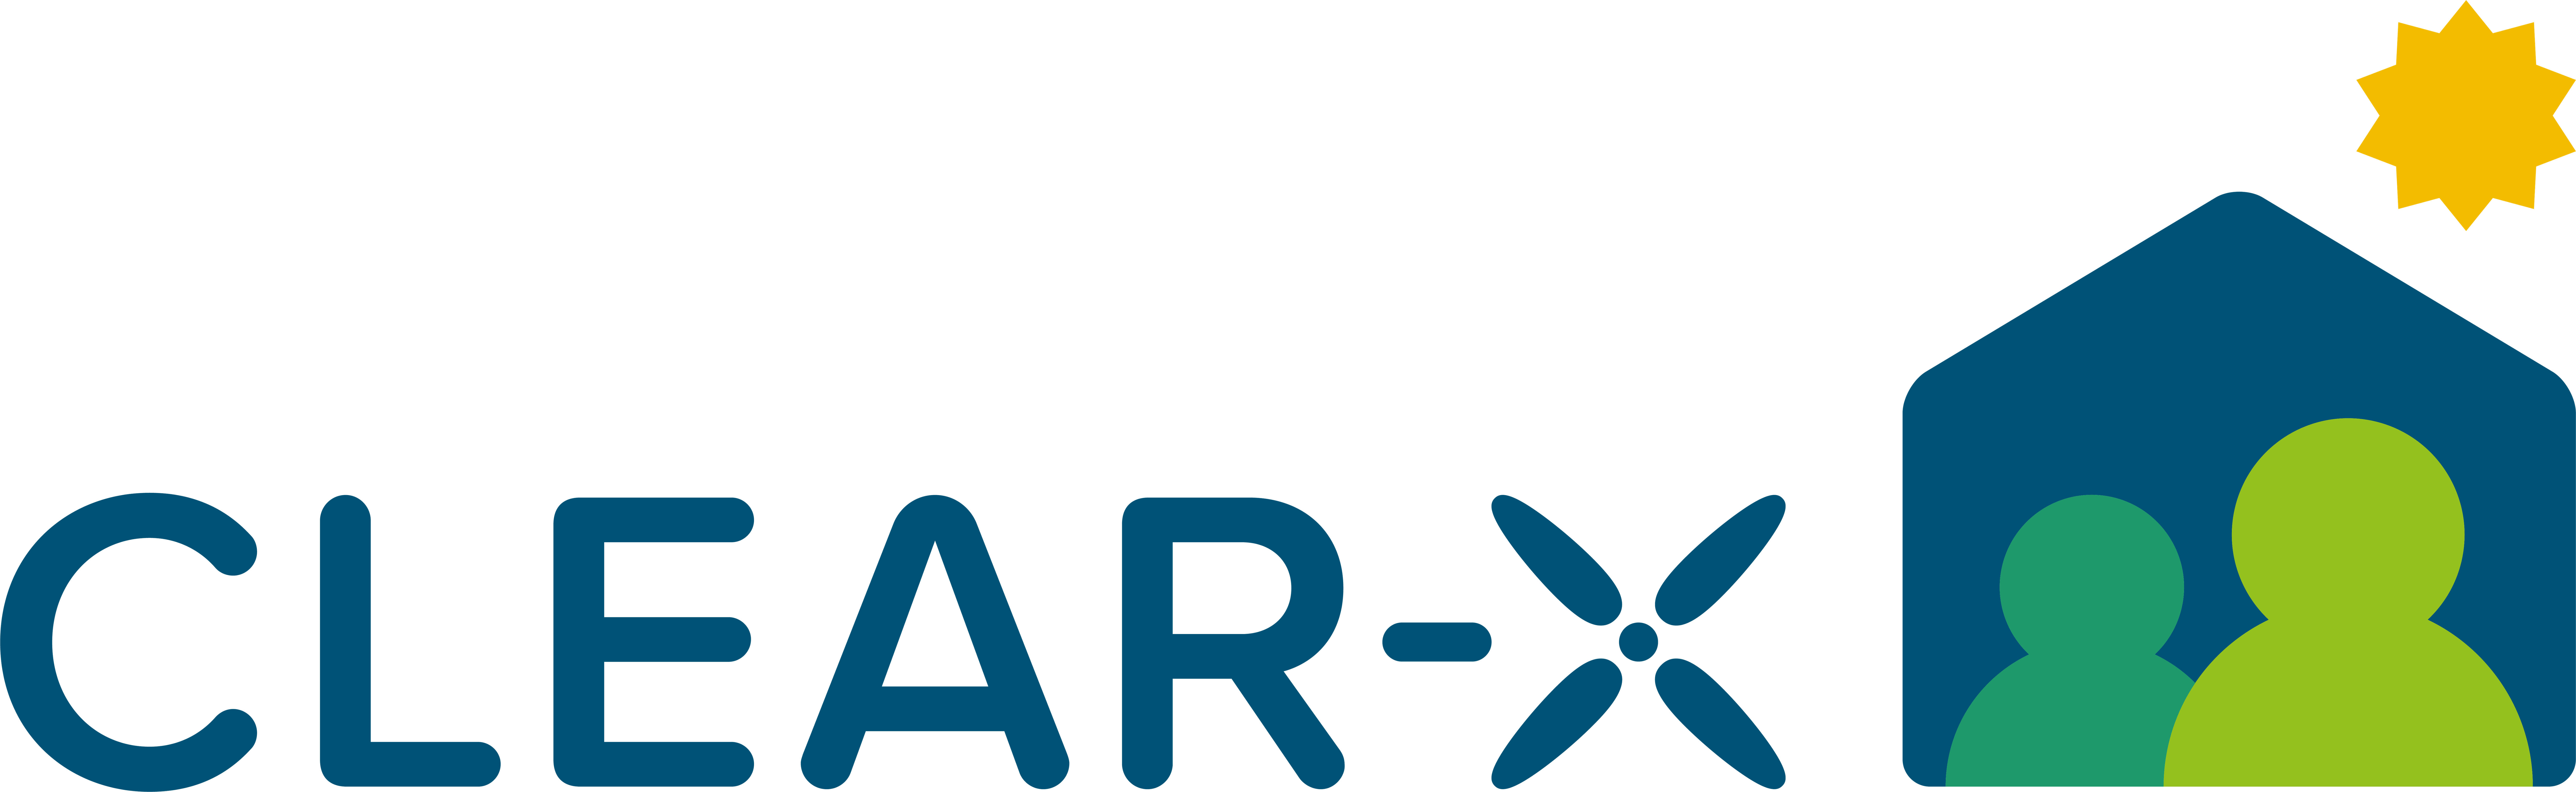 CLEAR-X Logo RGB-1.png